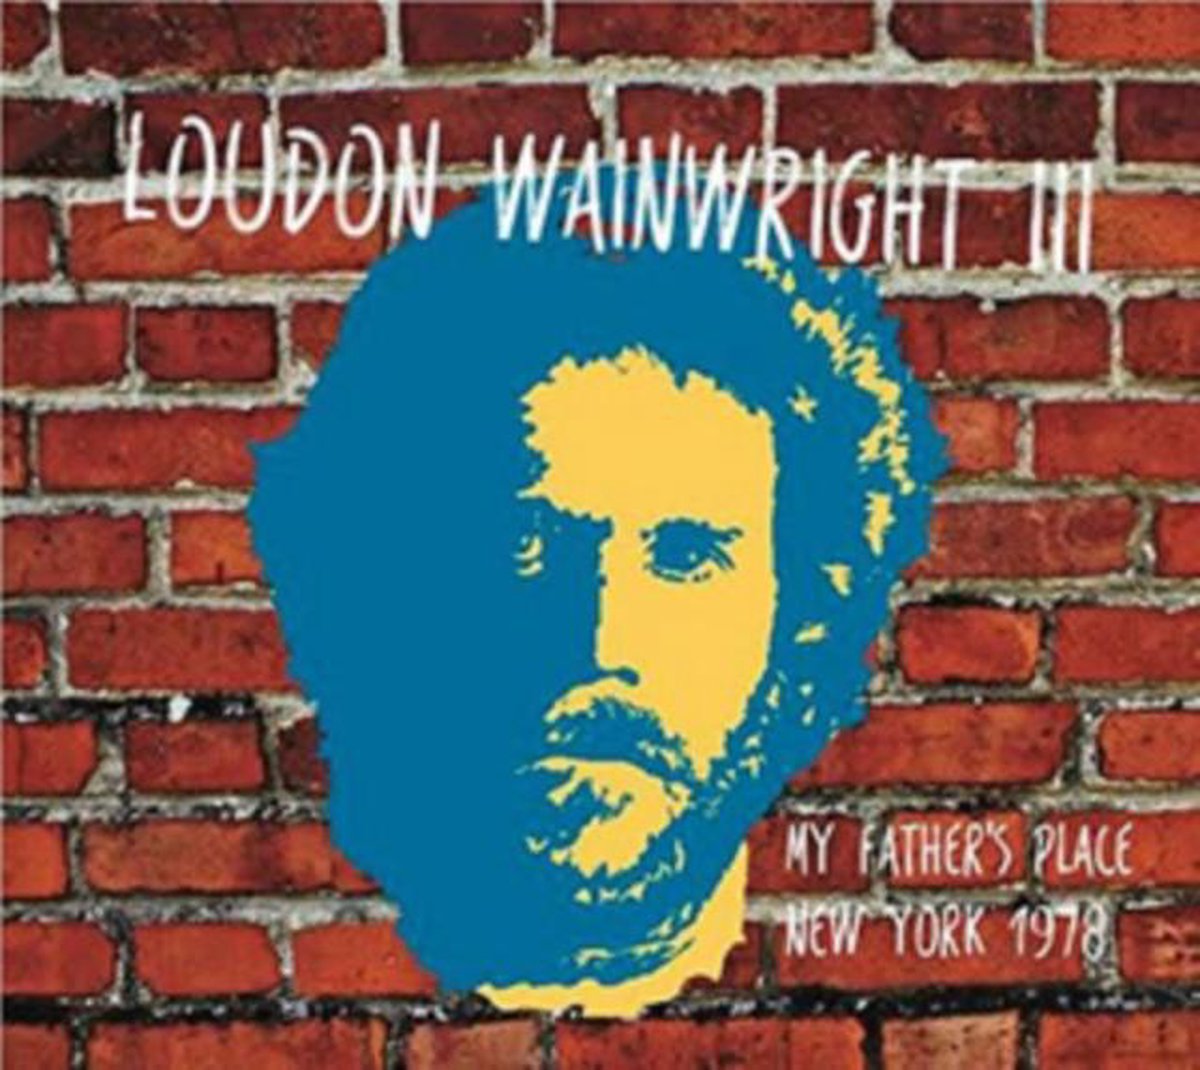 My Fathers Place. New York 1978 - Loudon -Iii- Wainwright